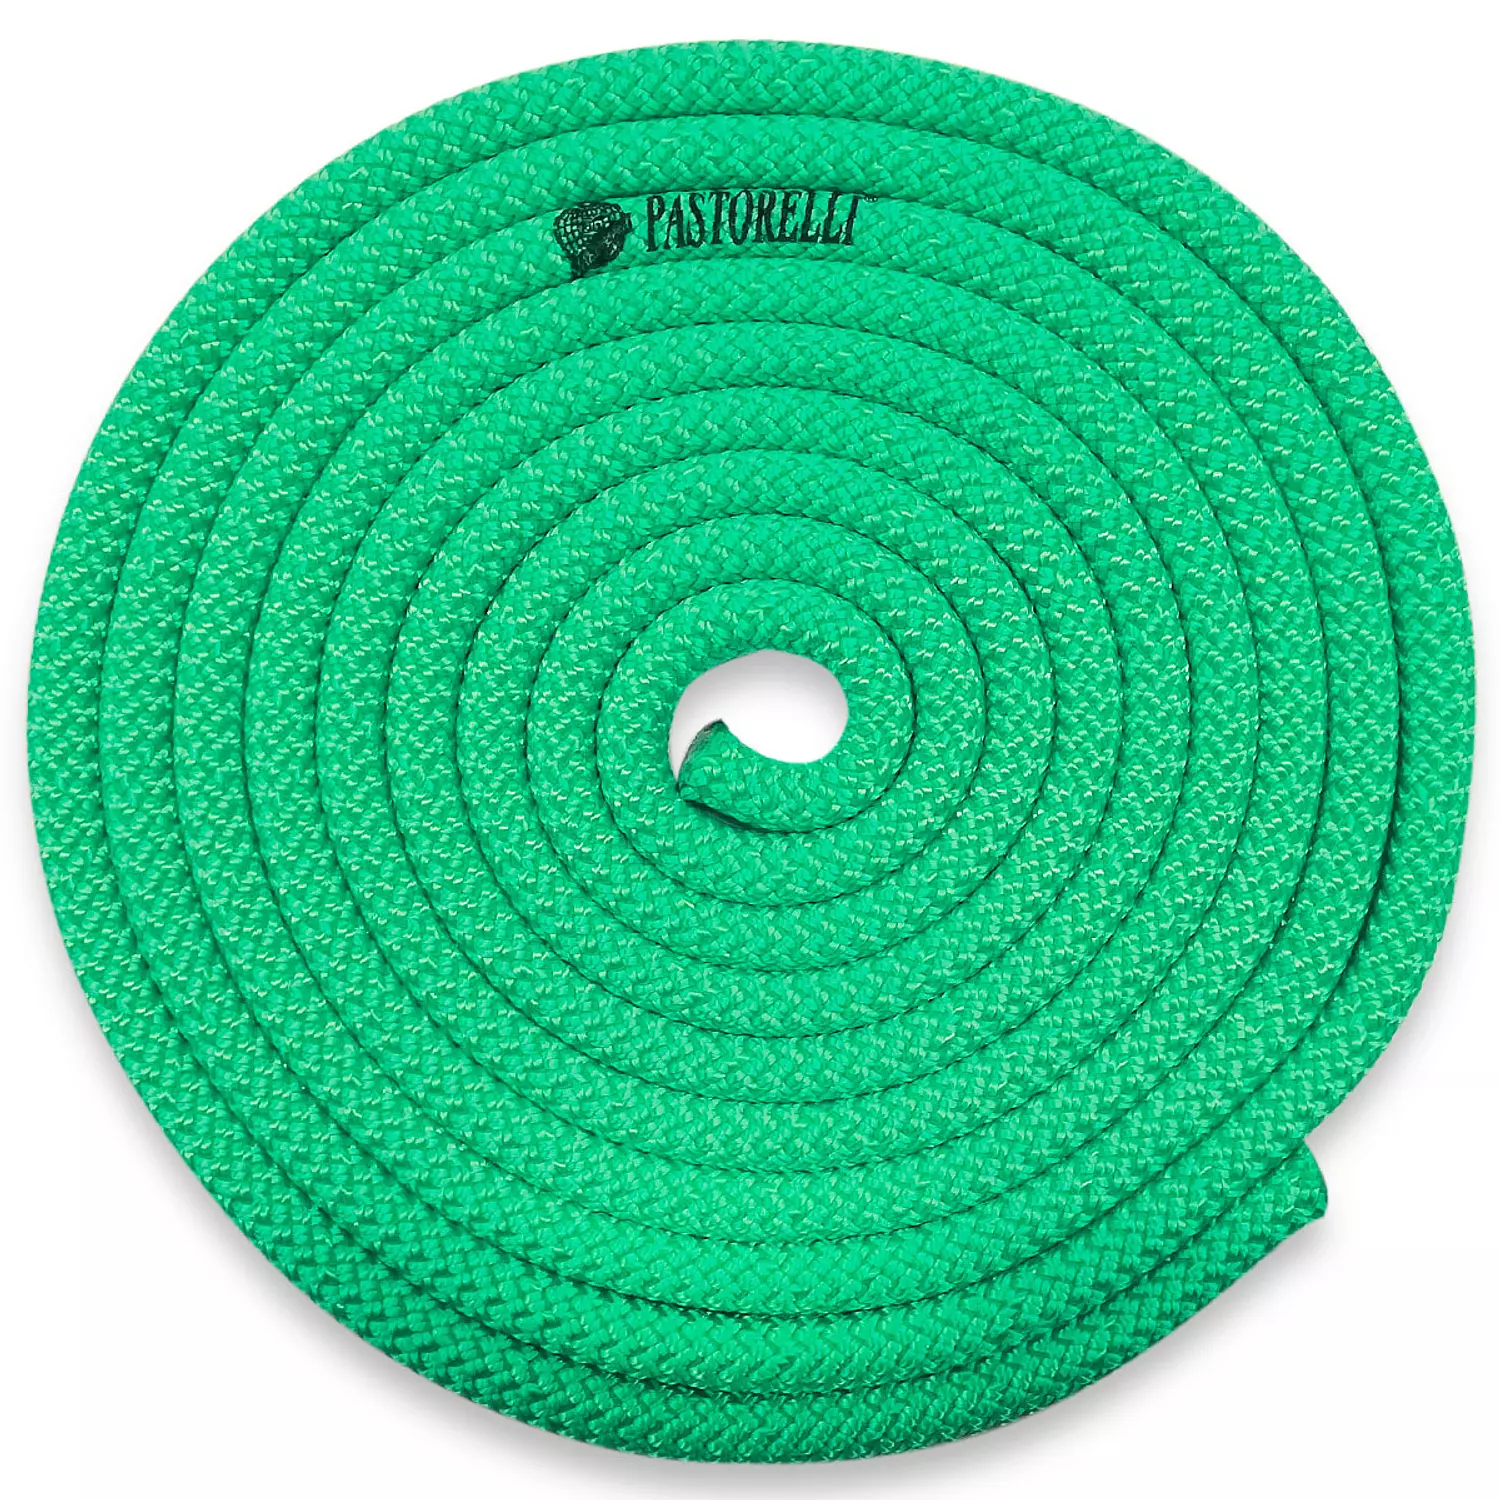 Pastorelli-New Orleans monochromatic rope FIG | 3m 4